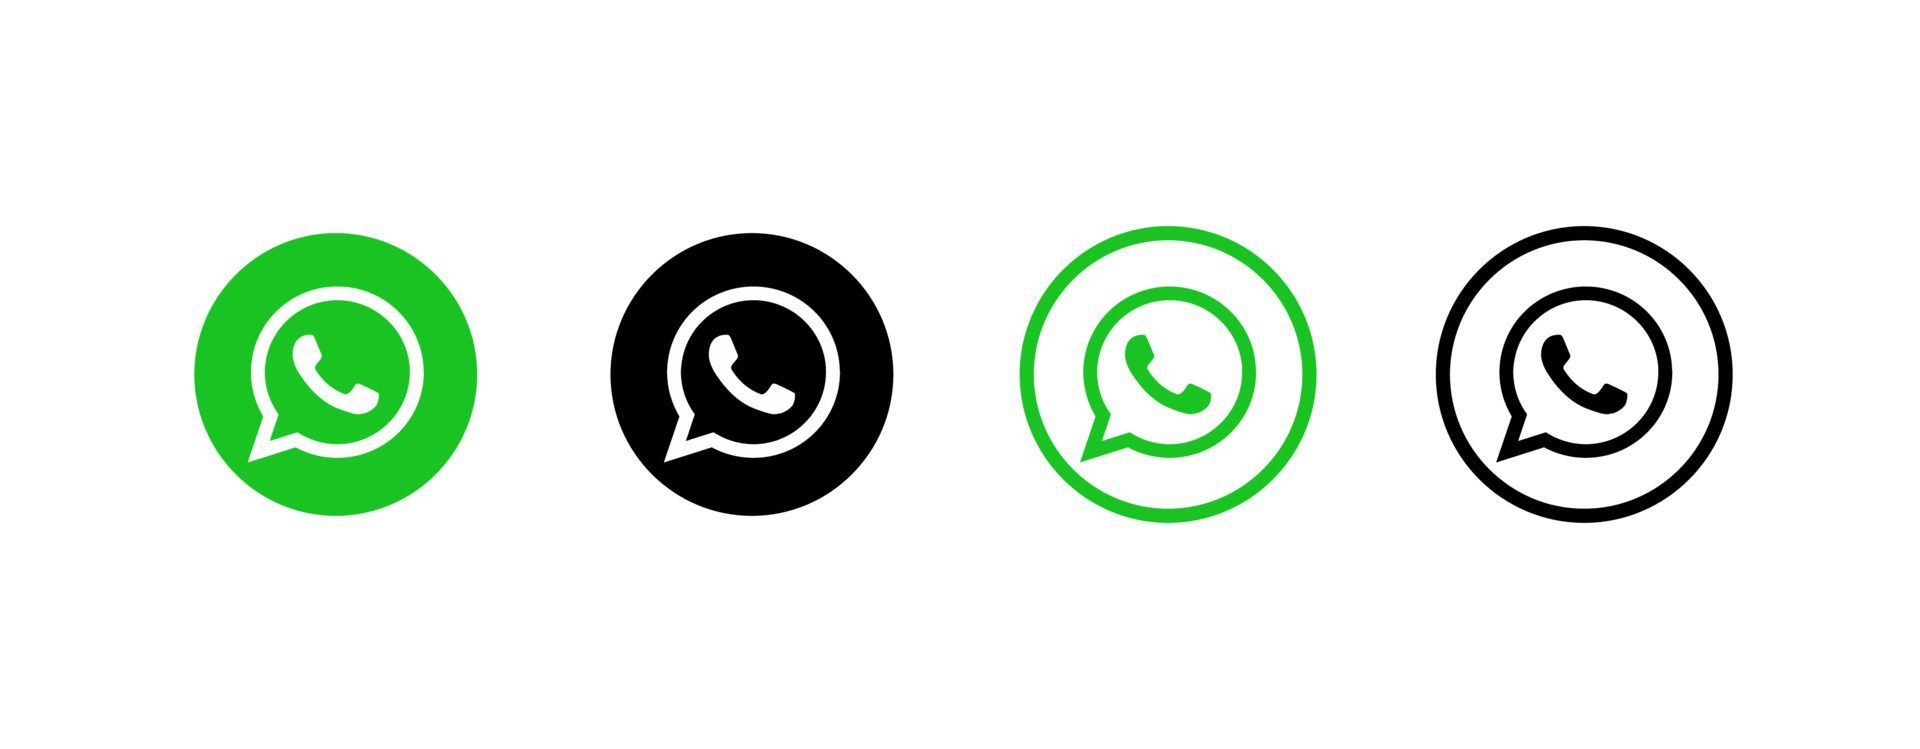 How to use WhatsApp Companion mode